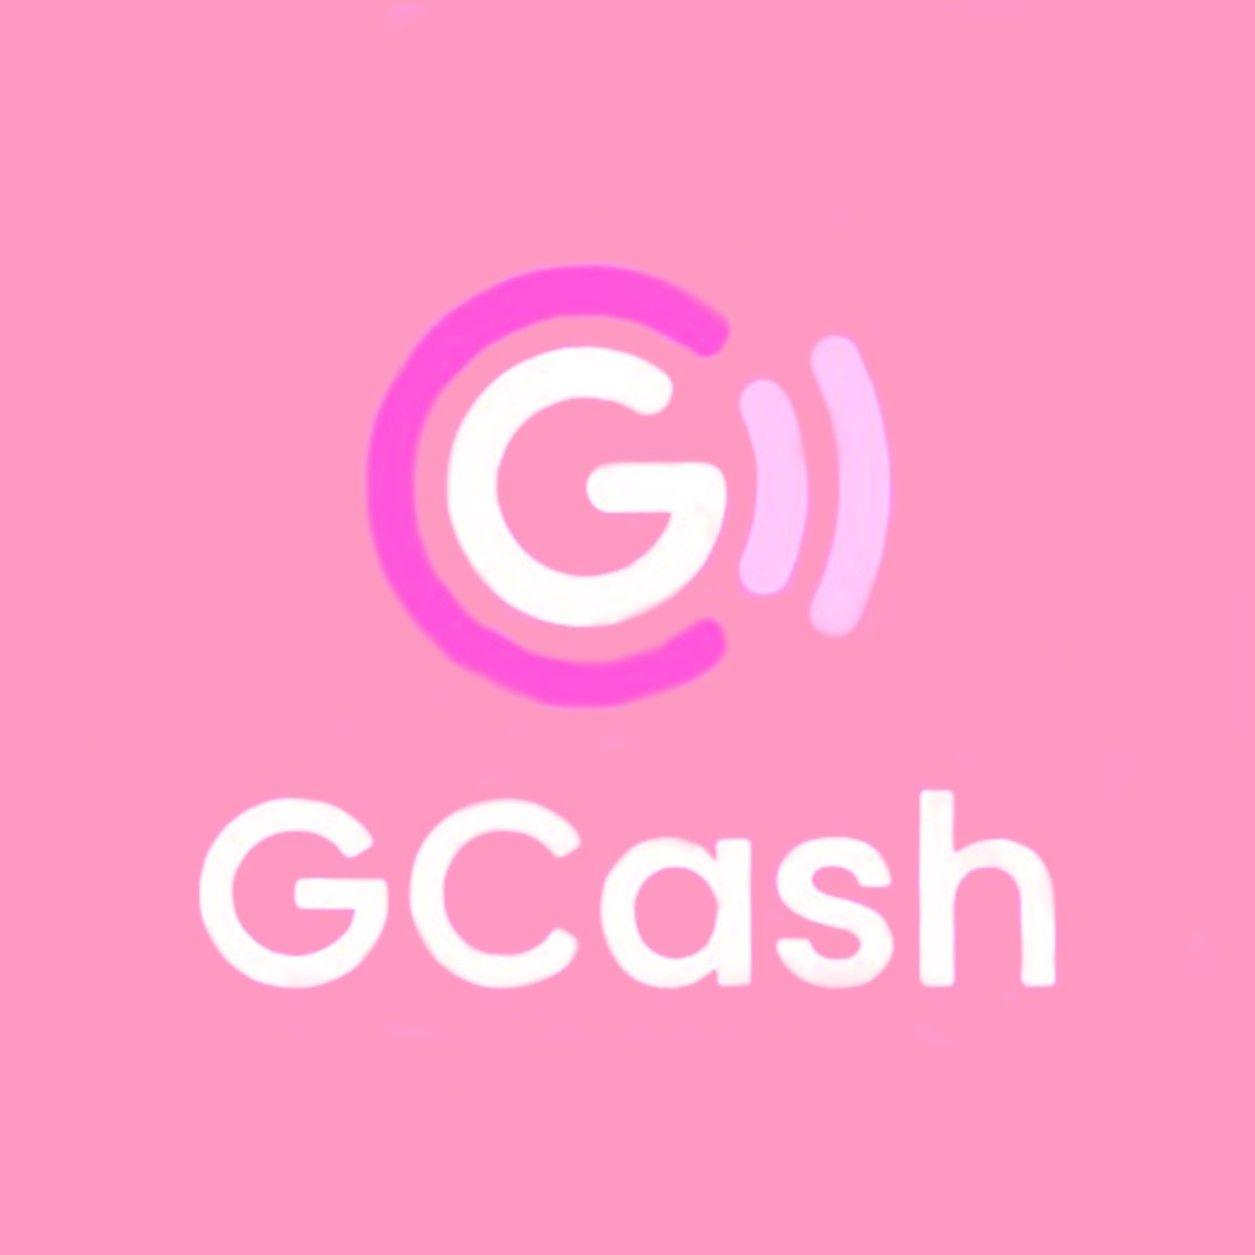 GCash Logo - Gcash Pink Icon | Lettering, Pinterest ...